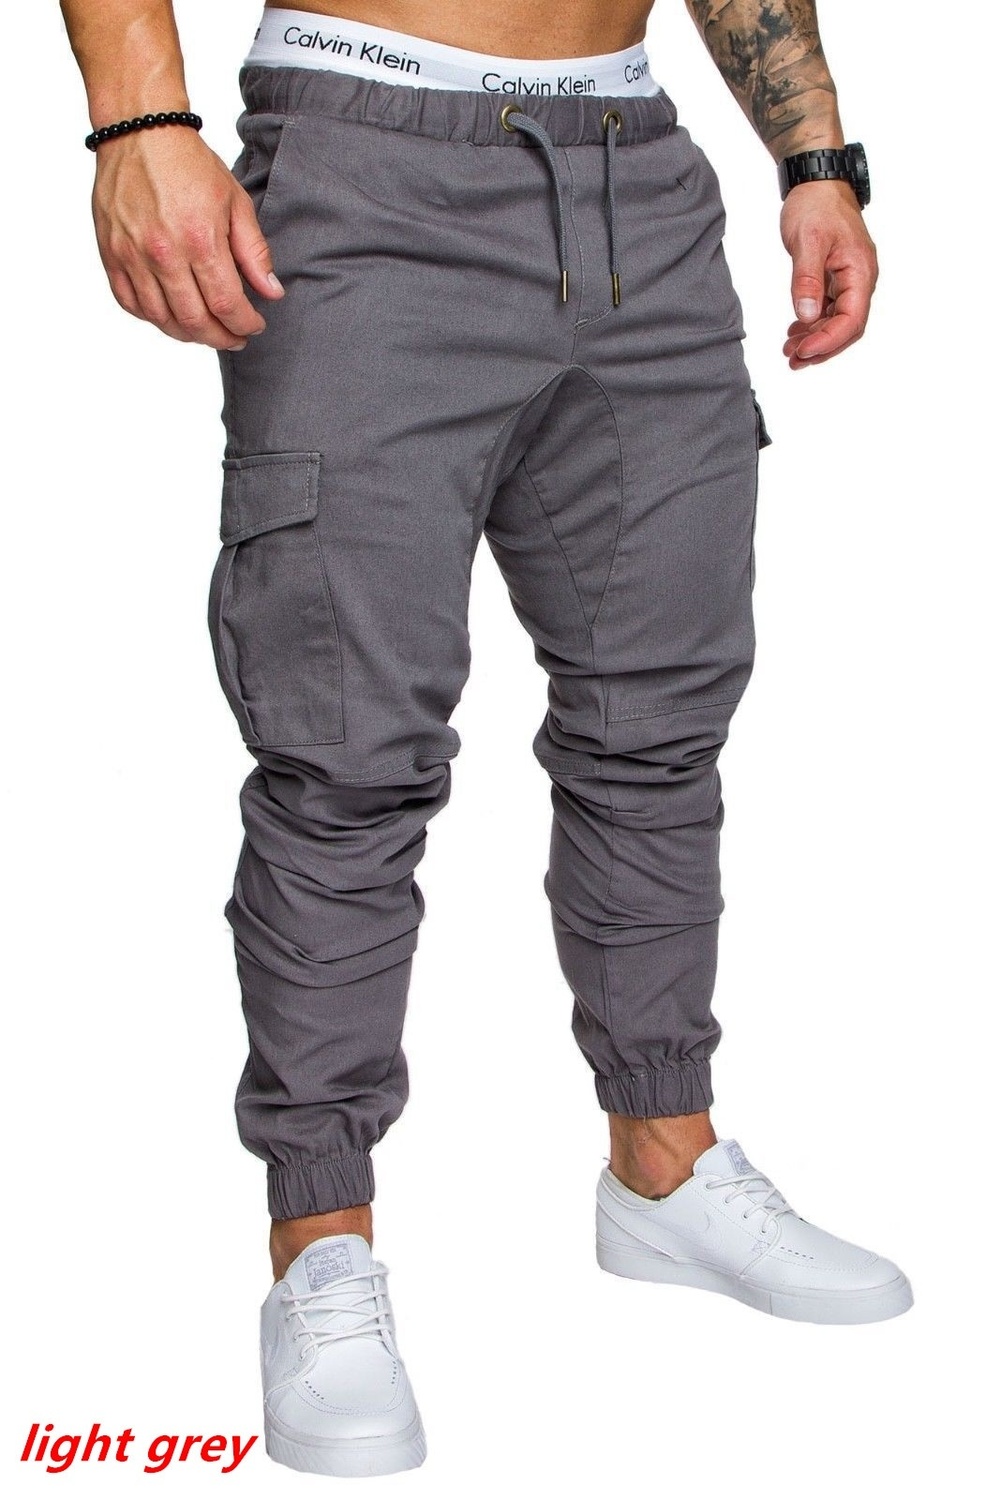 2020 Men's Fashion Pants Drawstring Outdoor Male Casual Multi-pocket Cargo Pants Trousers Plus Size 12 Colors